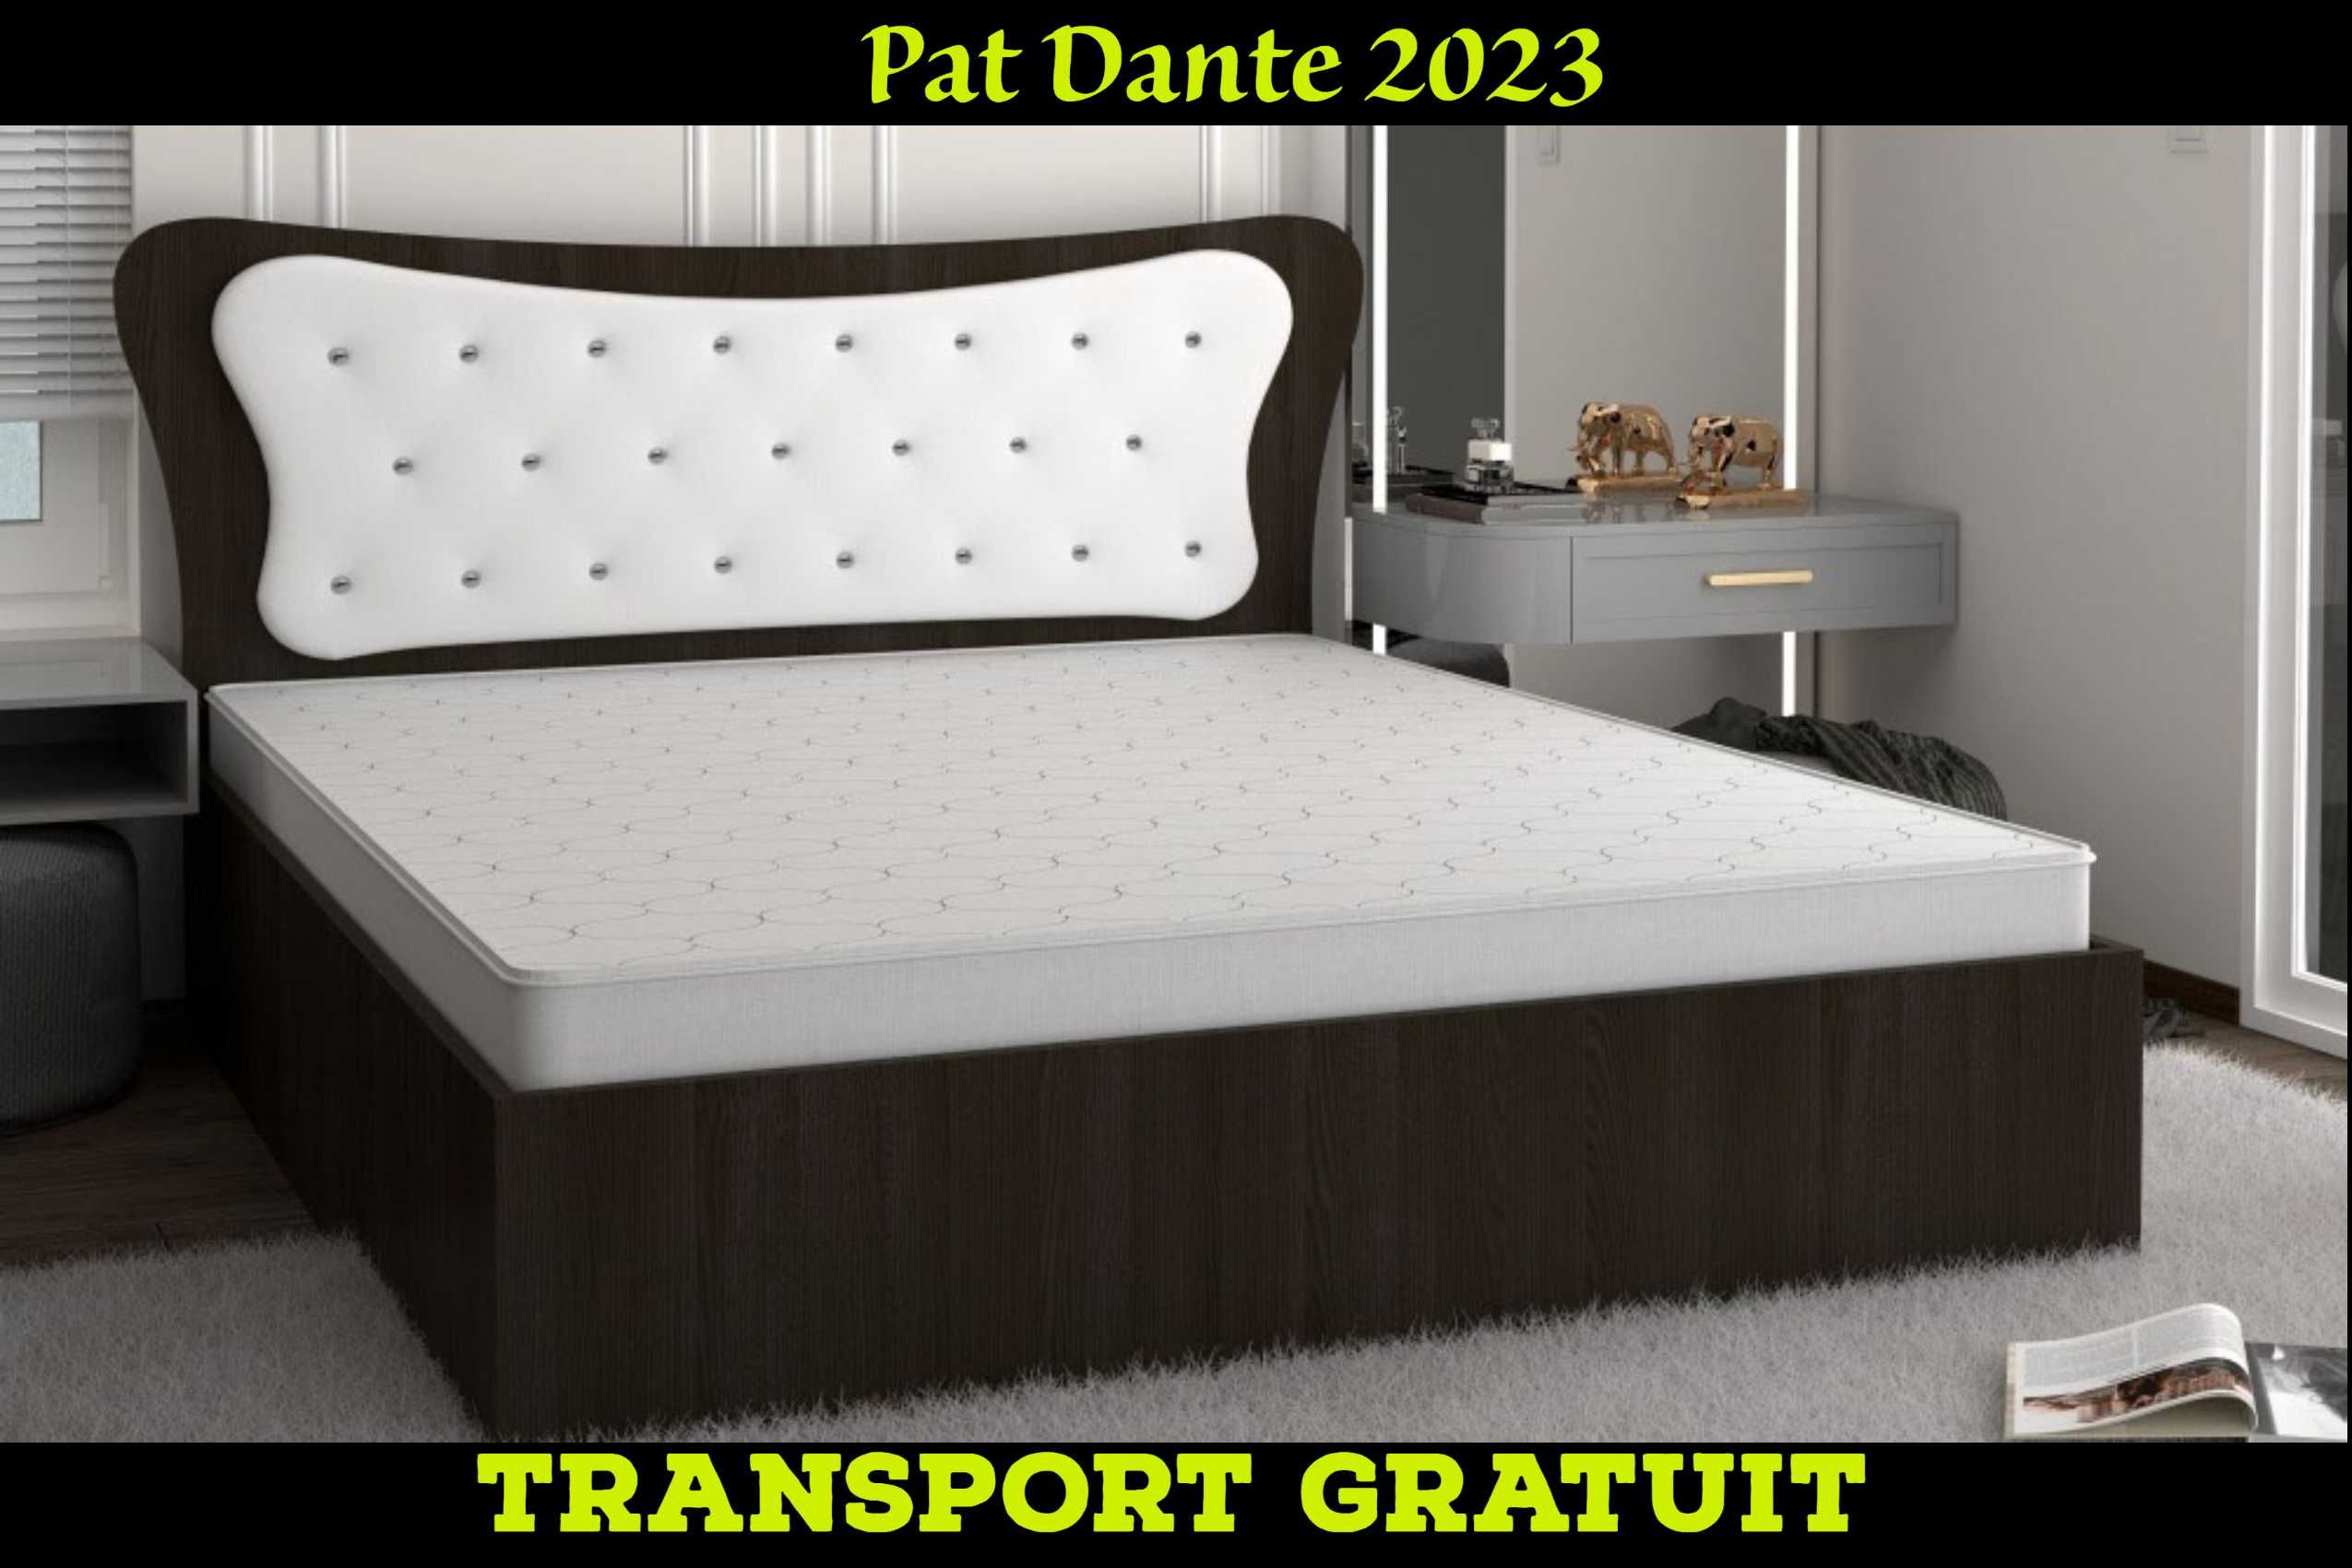 Pat Dante Tapitat Royale Nou Transport gratuit